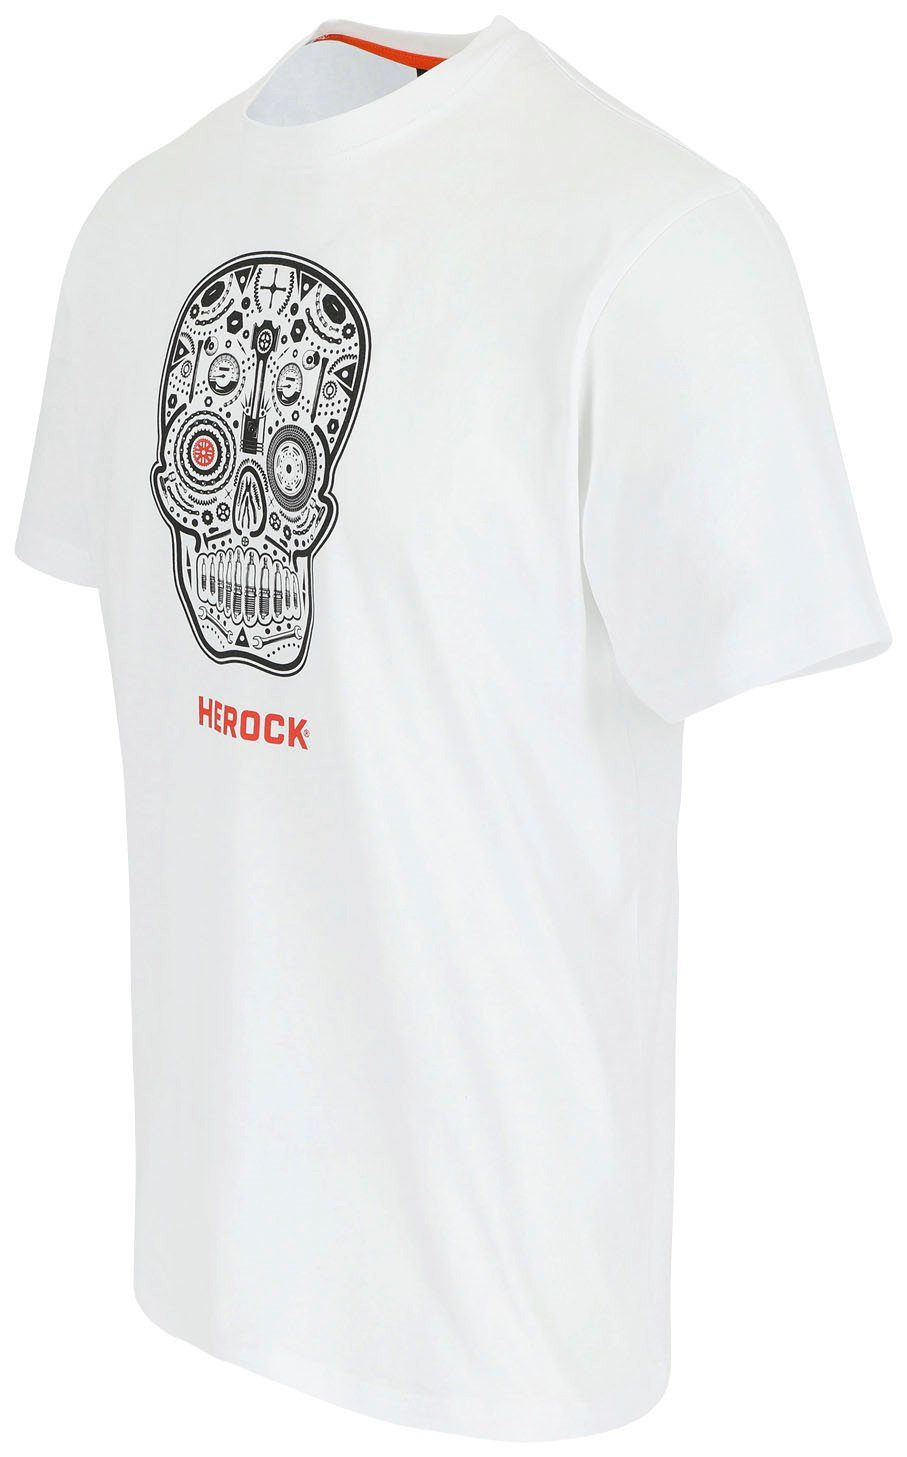 Limited Skullo Edition Herock T-Shirt